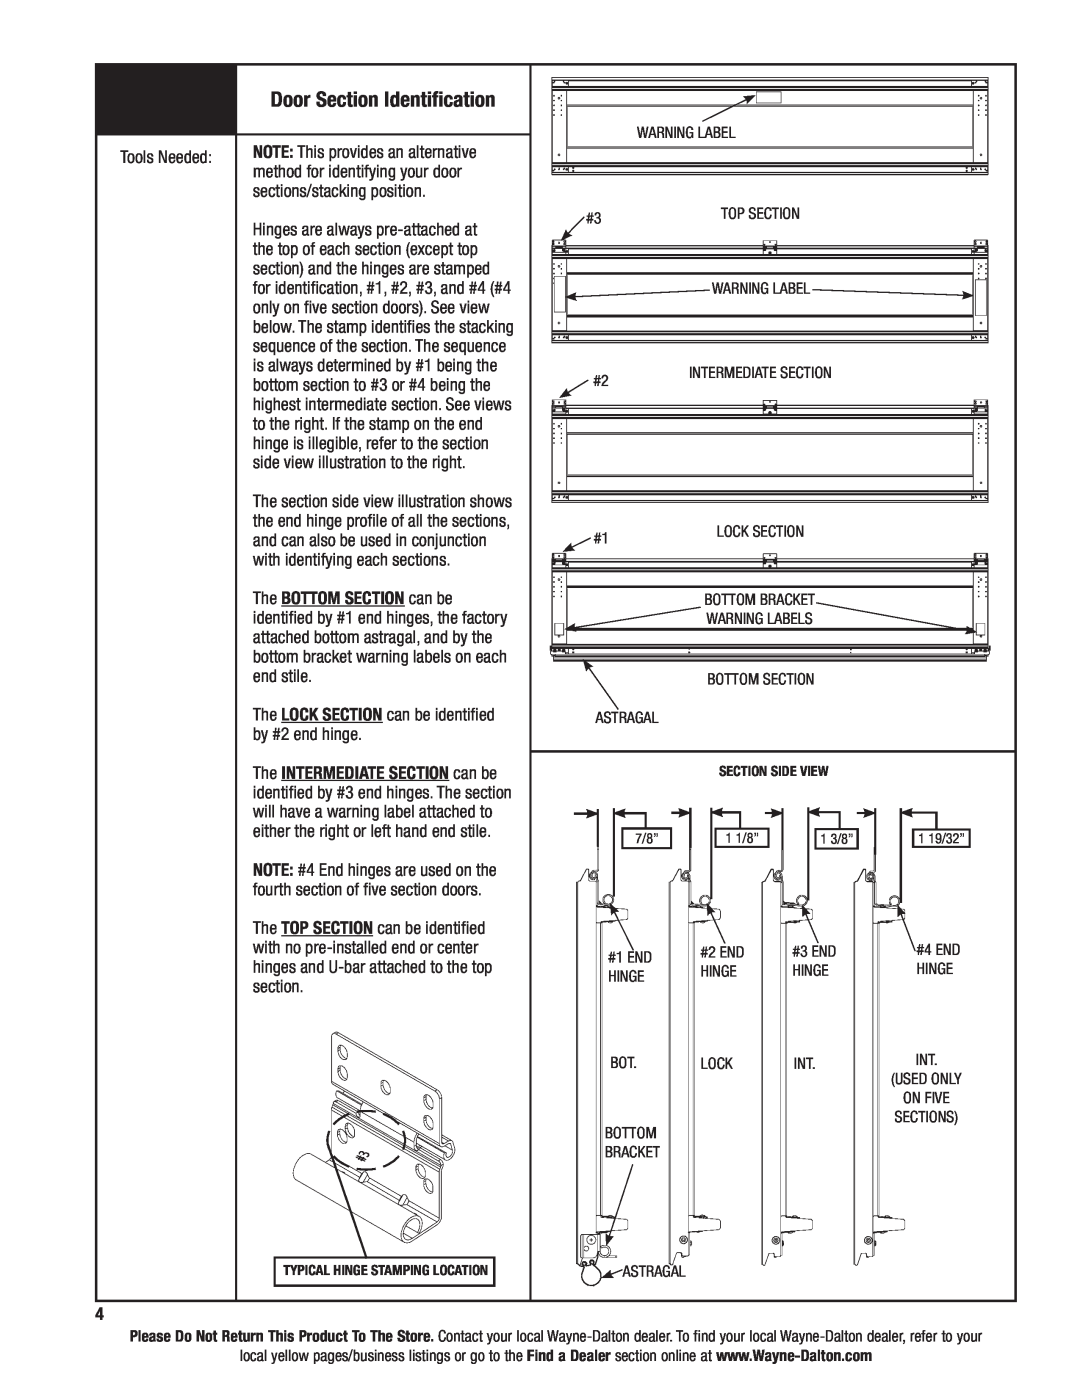 Wayne-Dalton 9400, AND 9600 installation instructions Door Section Identification 